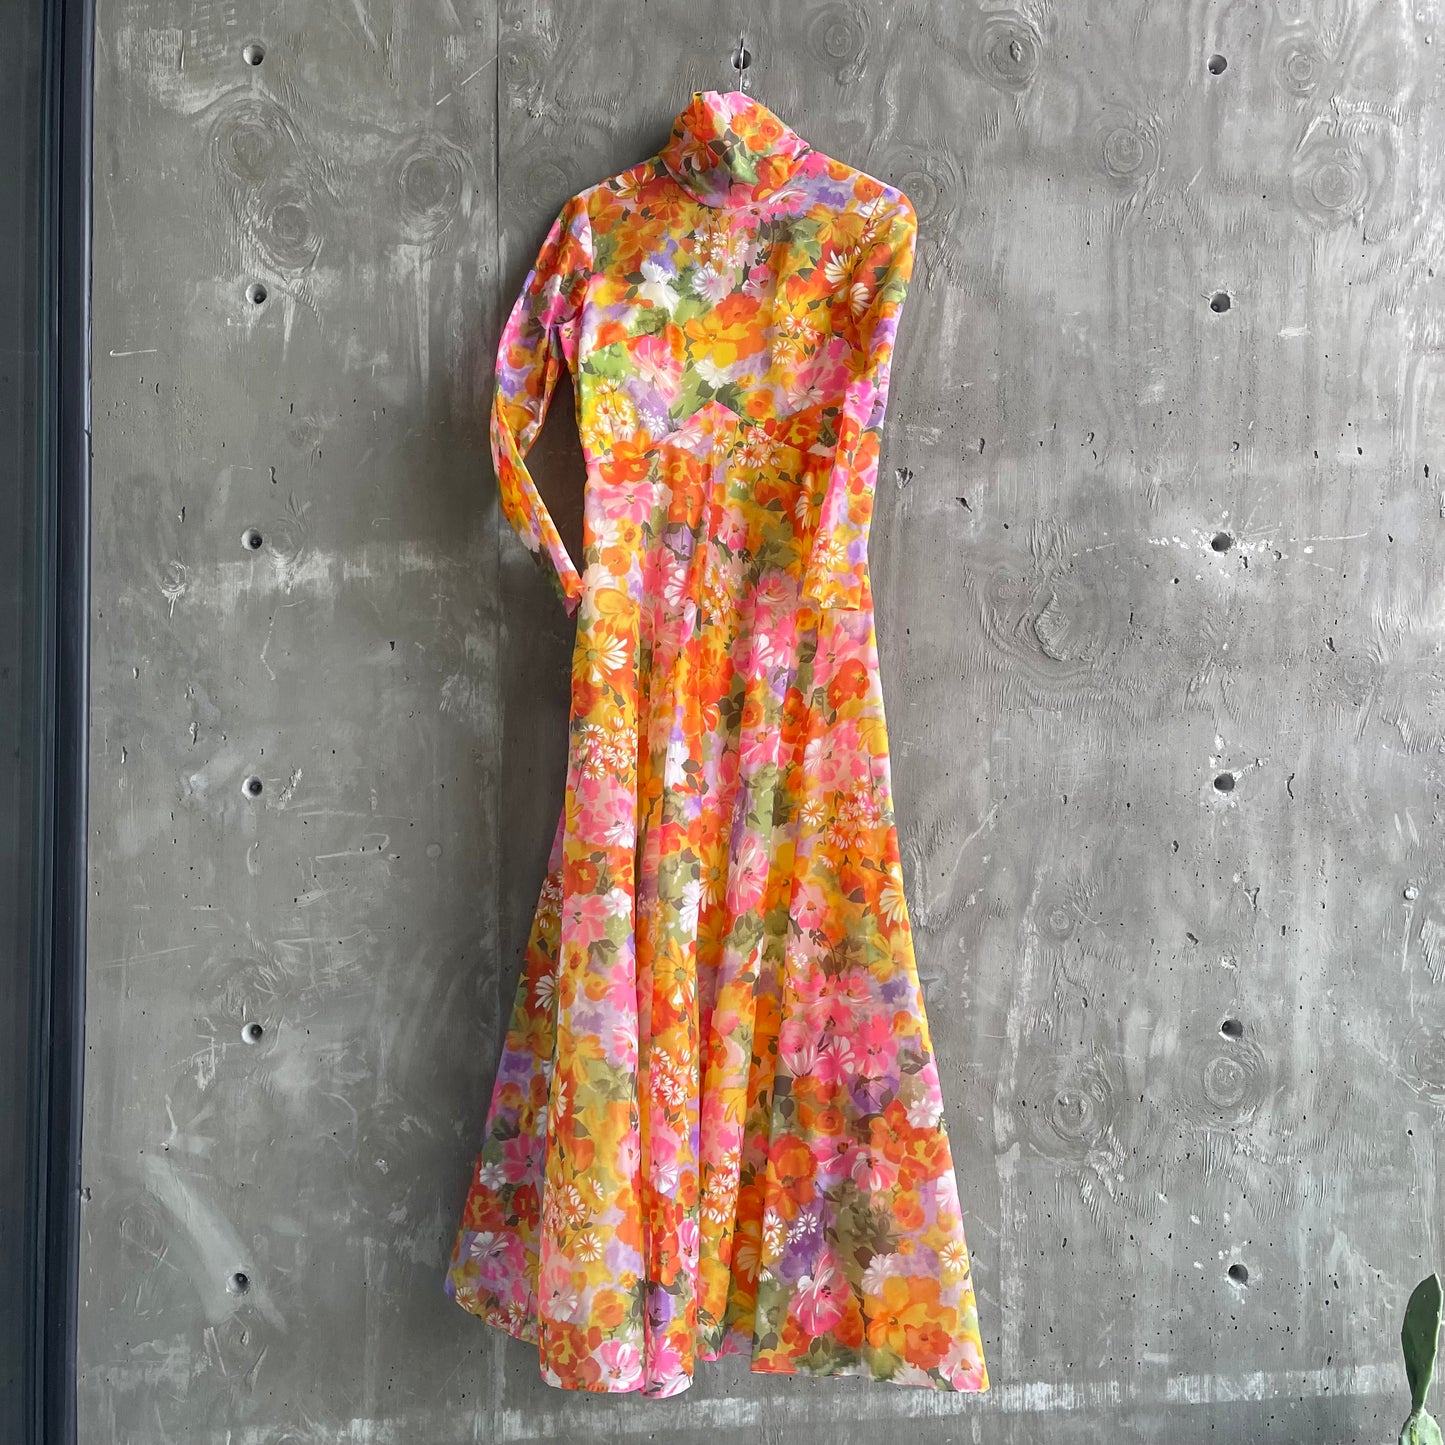 Vintage Prairie Dress in Vibrant Floral Print 70’s Handmade